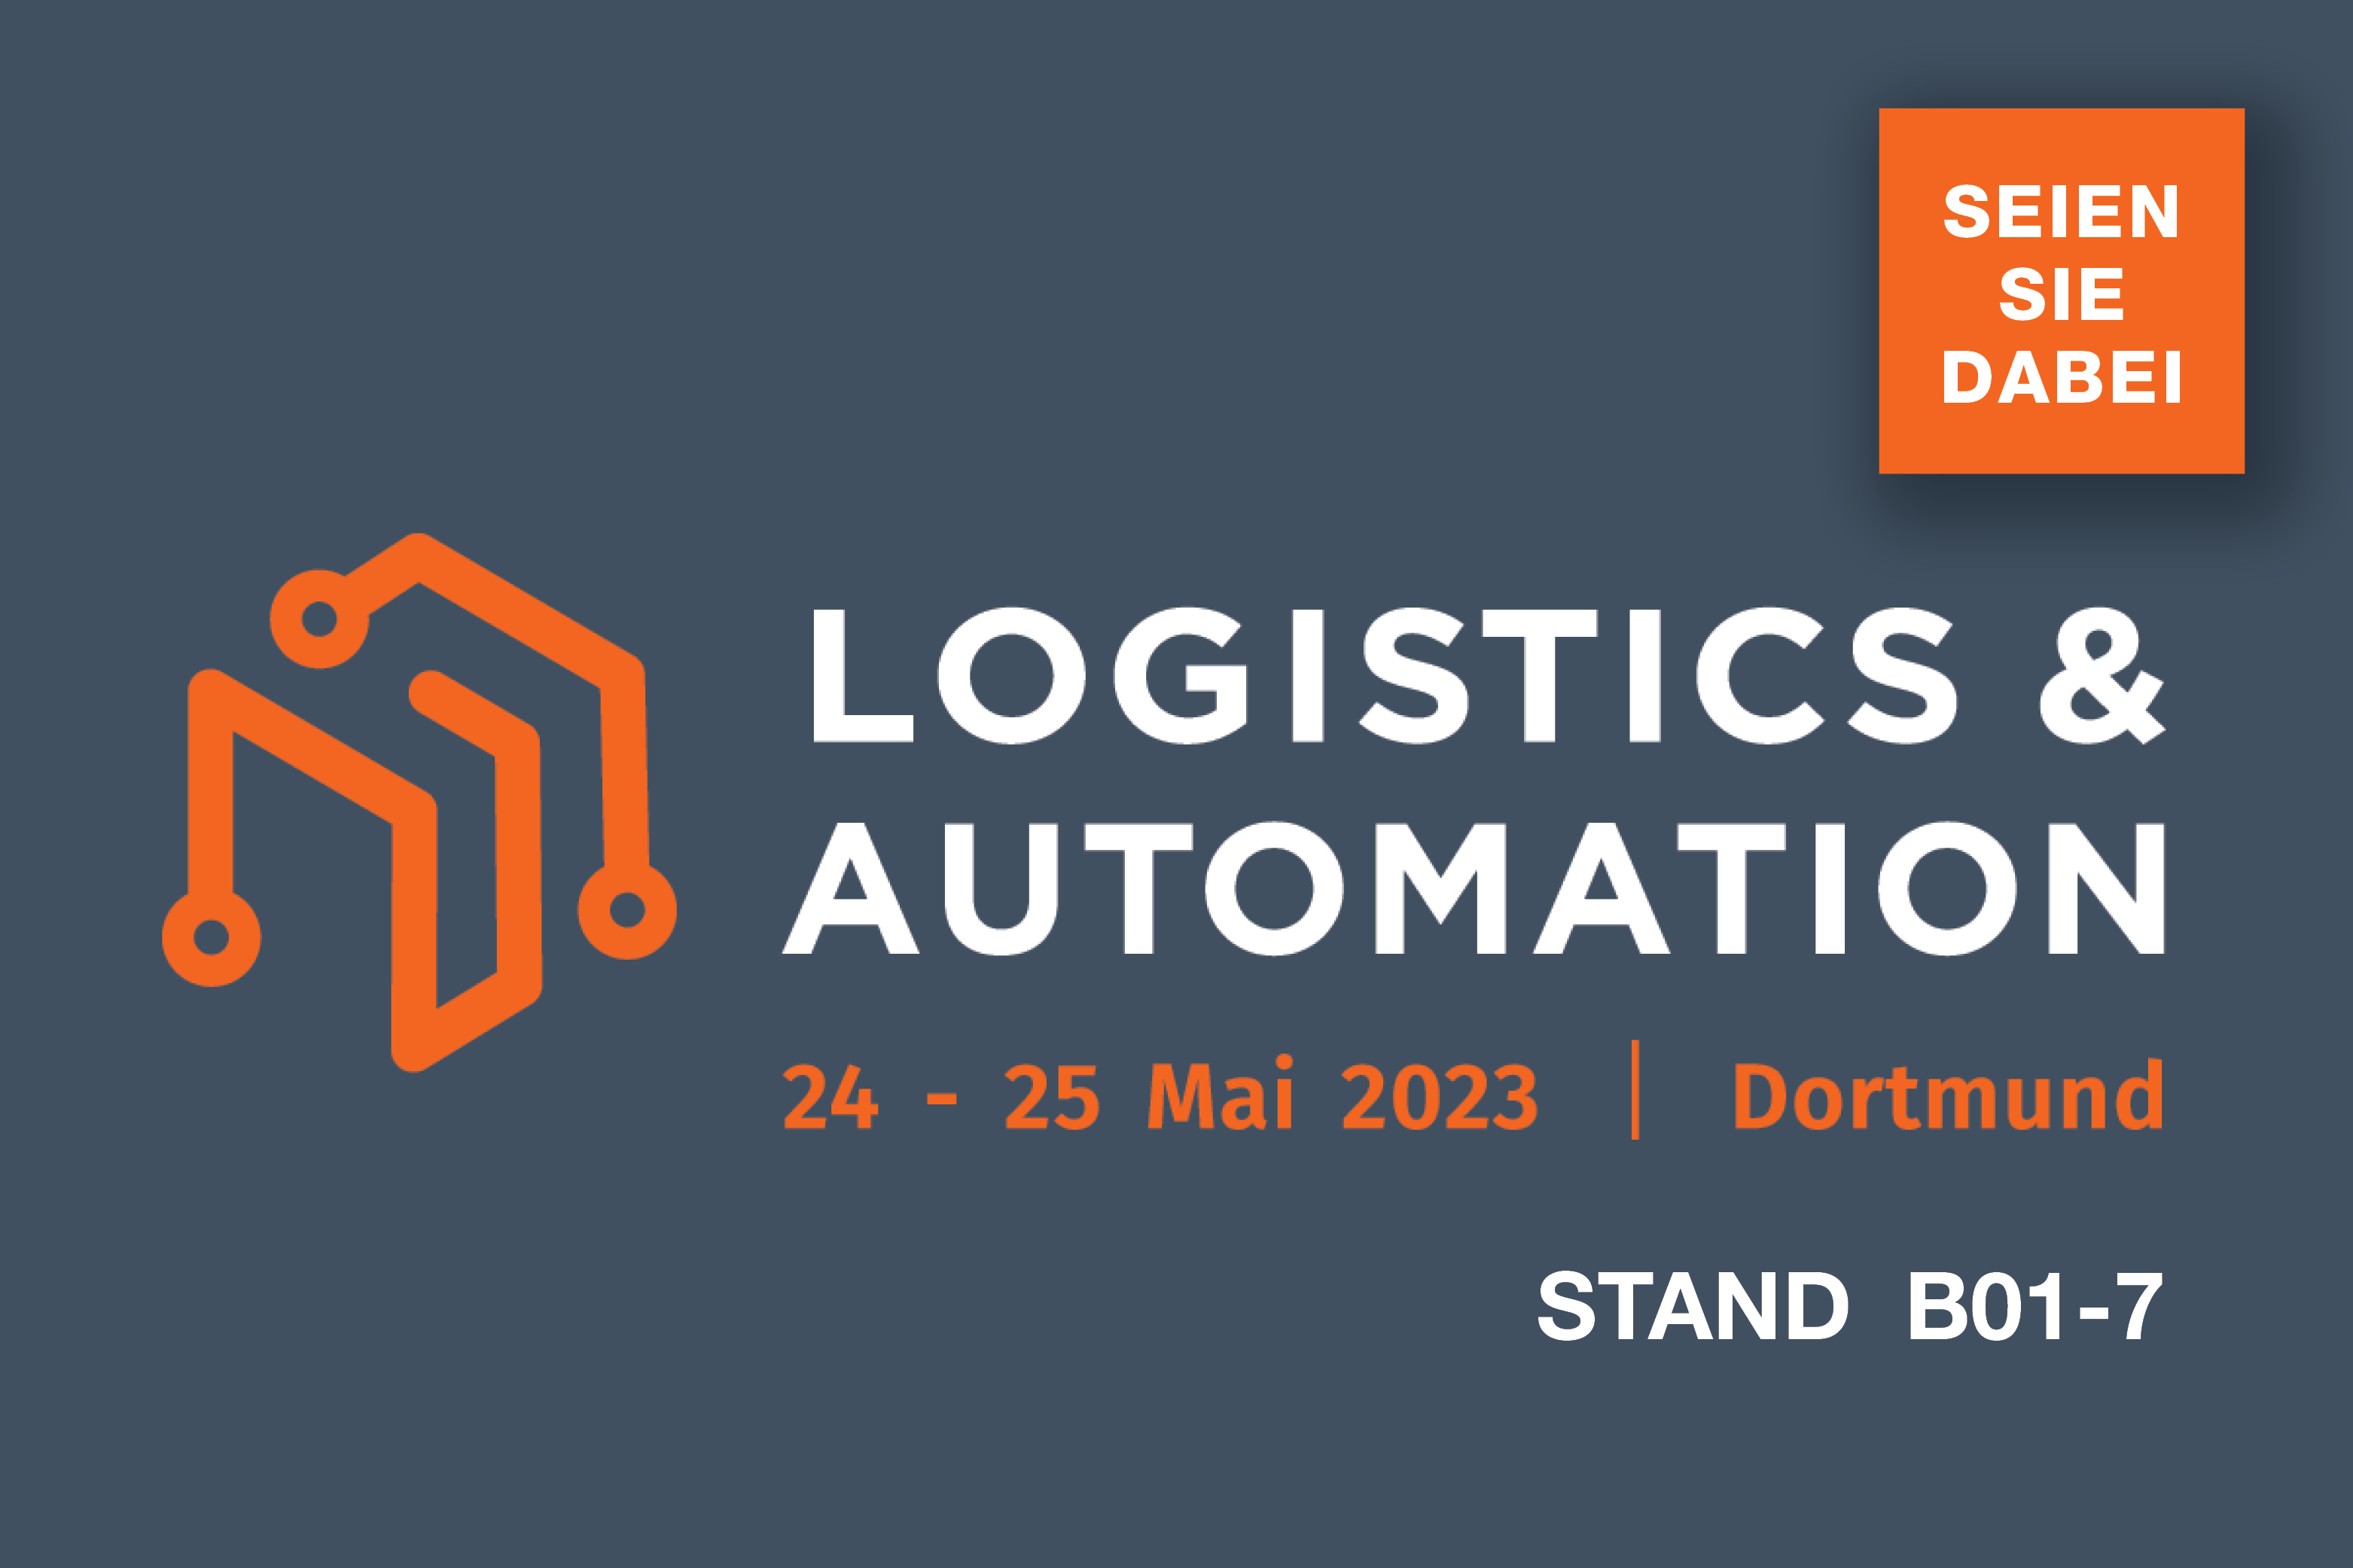 Dortmund Logistics & Automation 2023